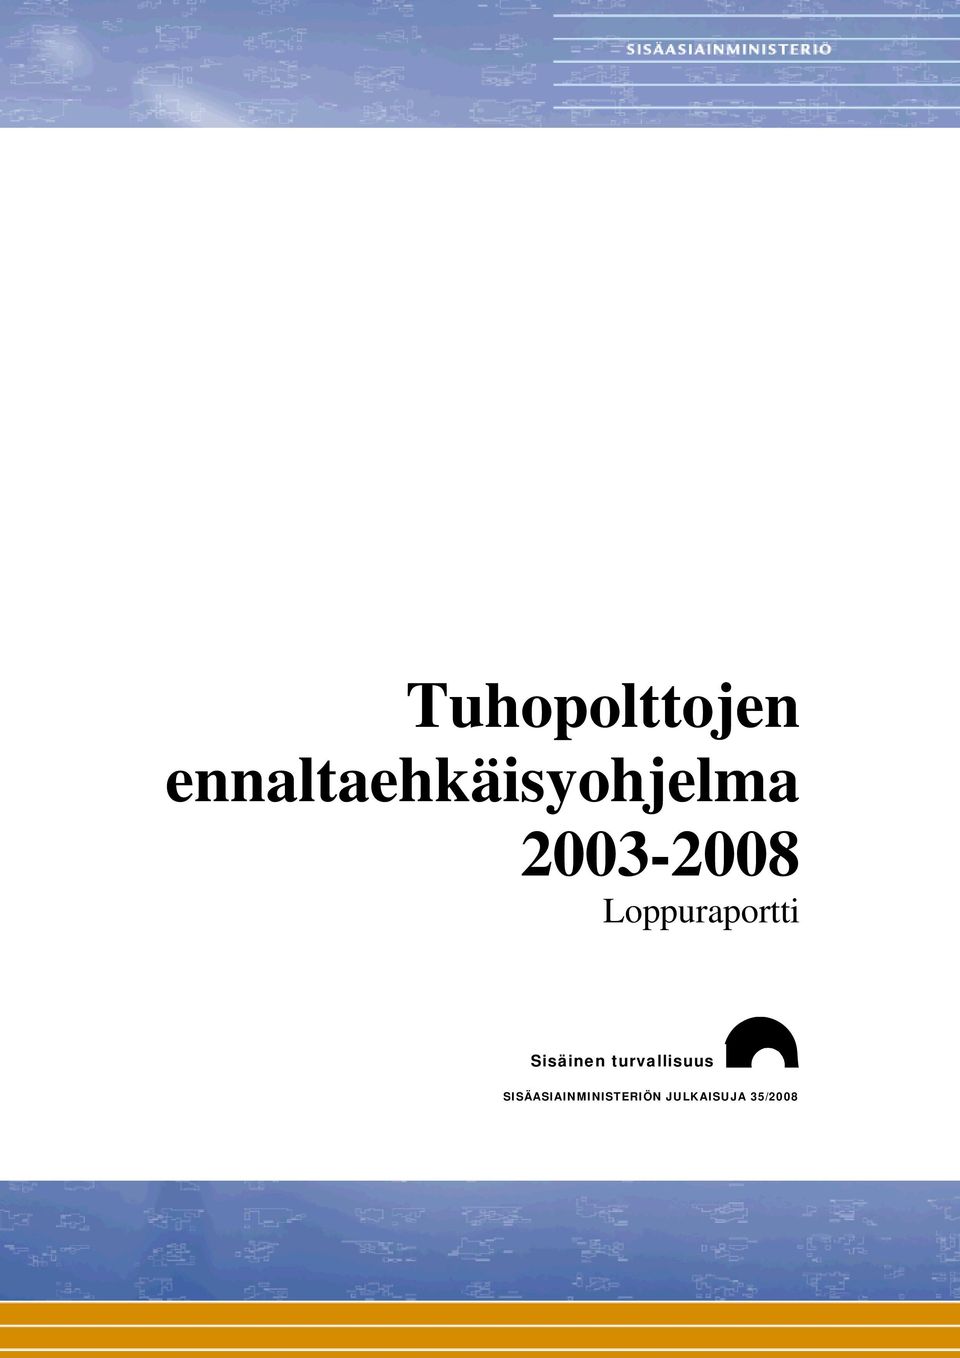 2003-2008 Loppuraportti